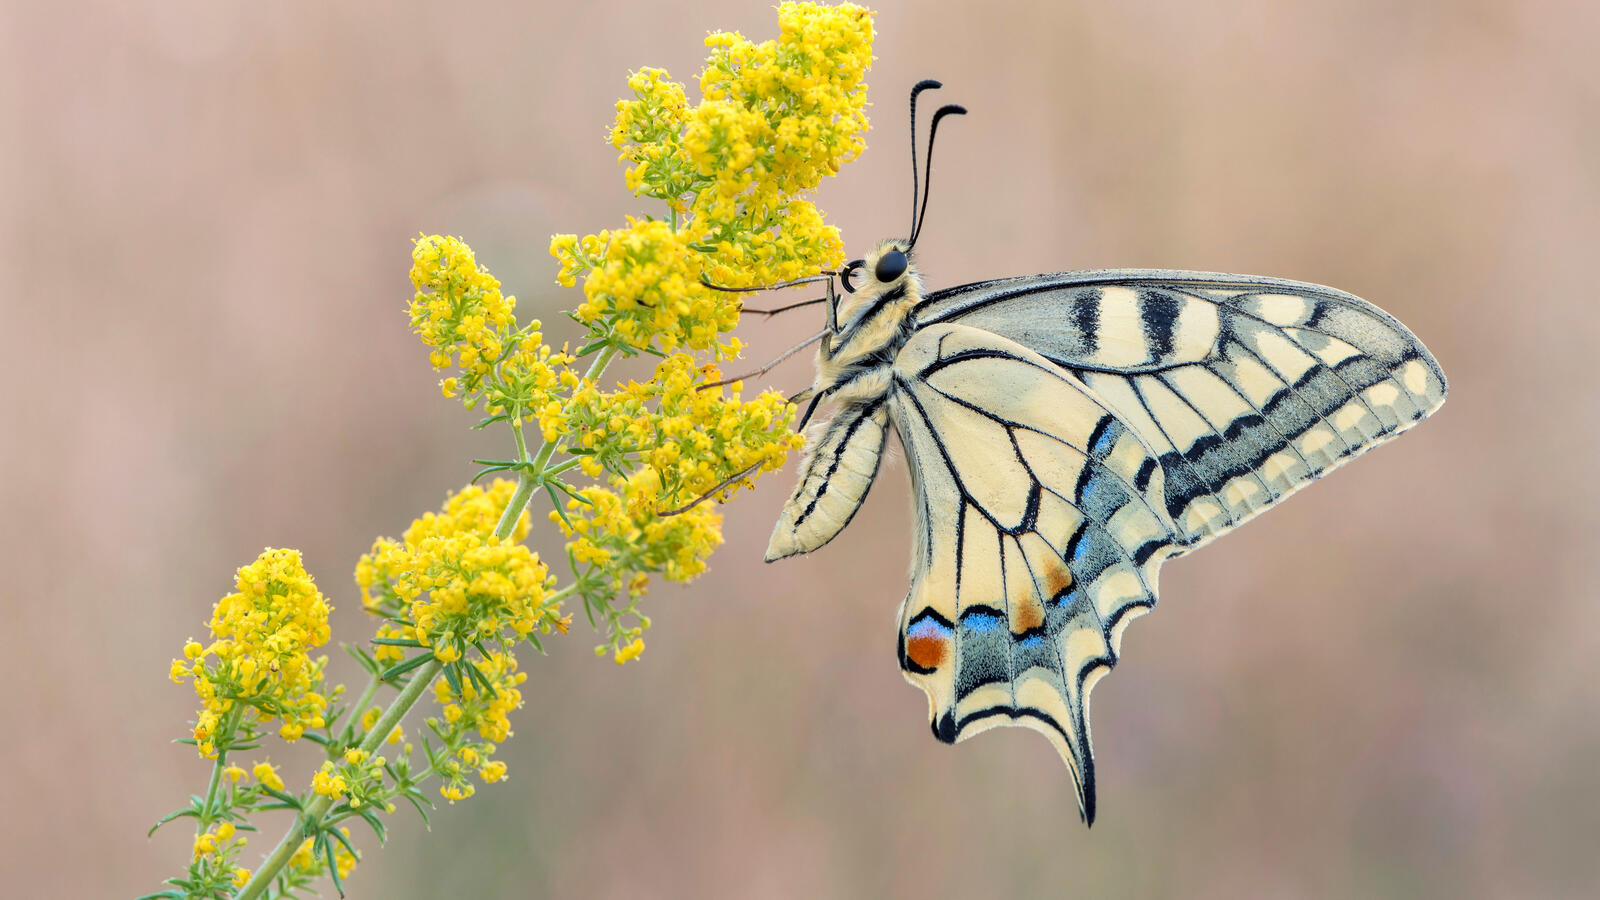 Бесплатное фото Бабочка ласточкин хвост сидит на желтом цветочке